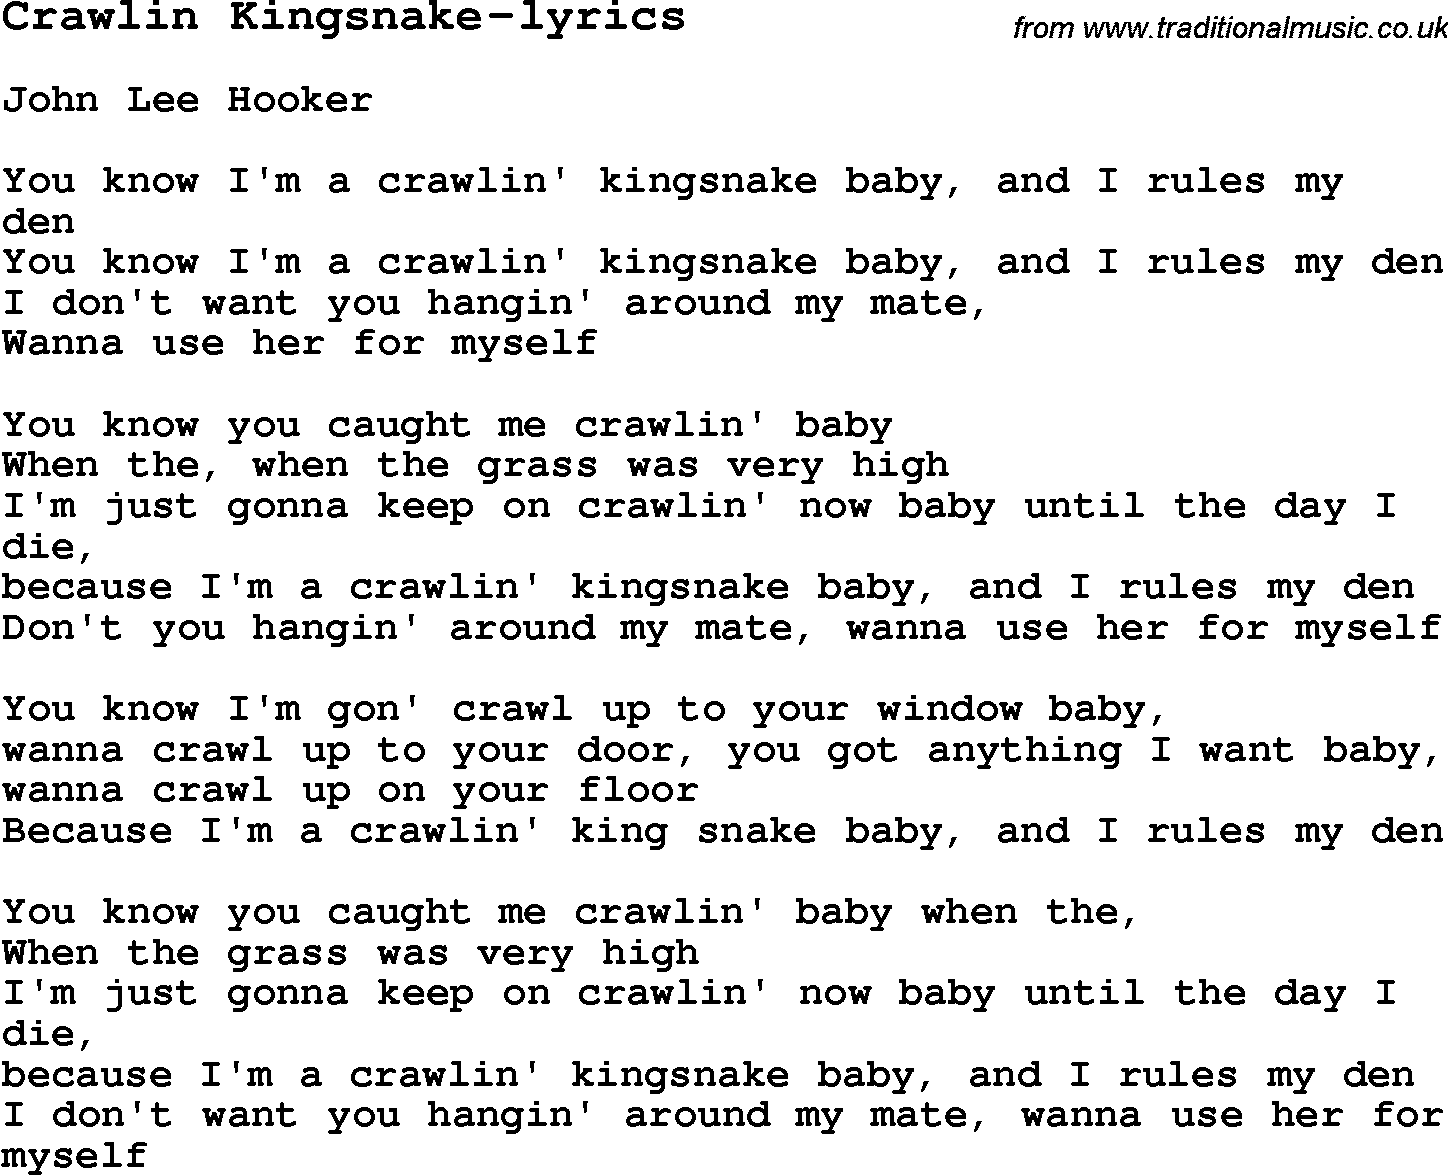 Blues Guitar Song, lyrics, chords, tablature, playing hints for Crawlin Kingsnake-lyrics